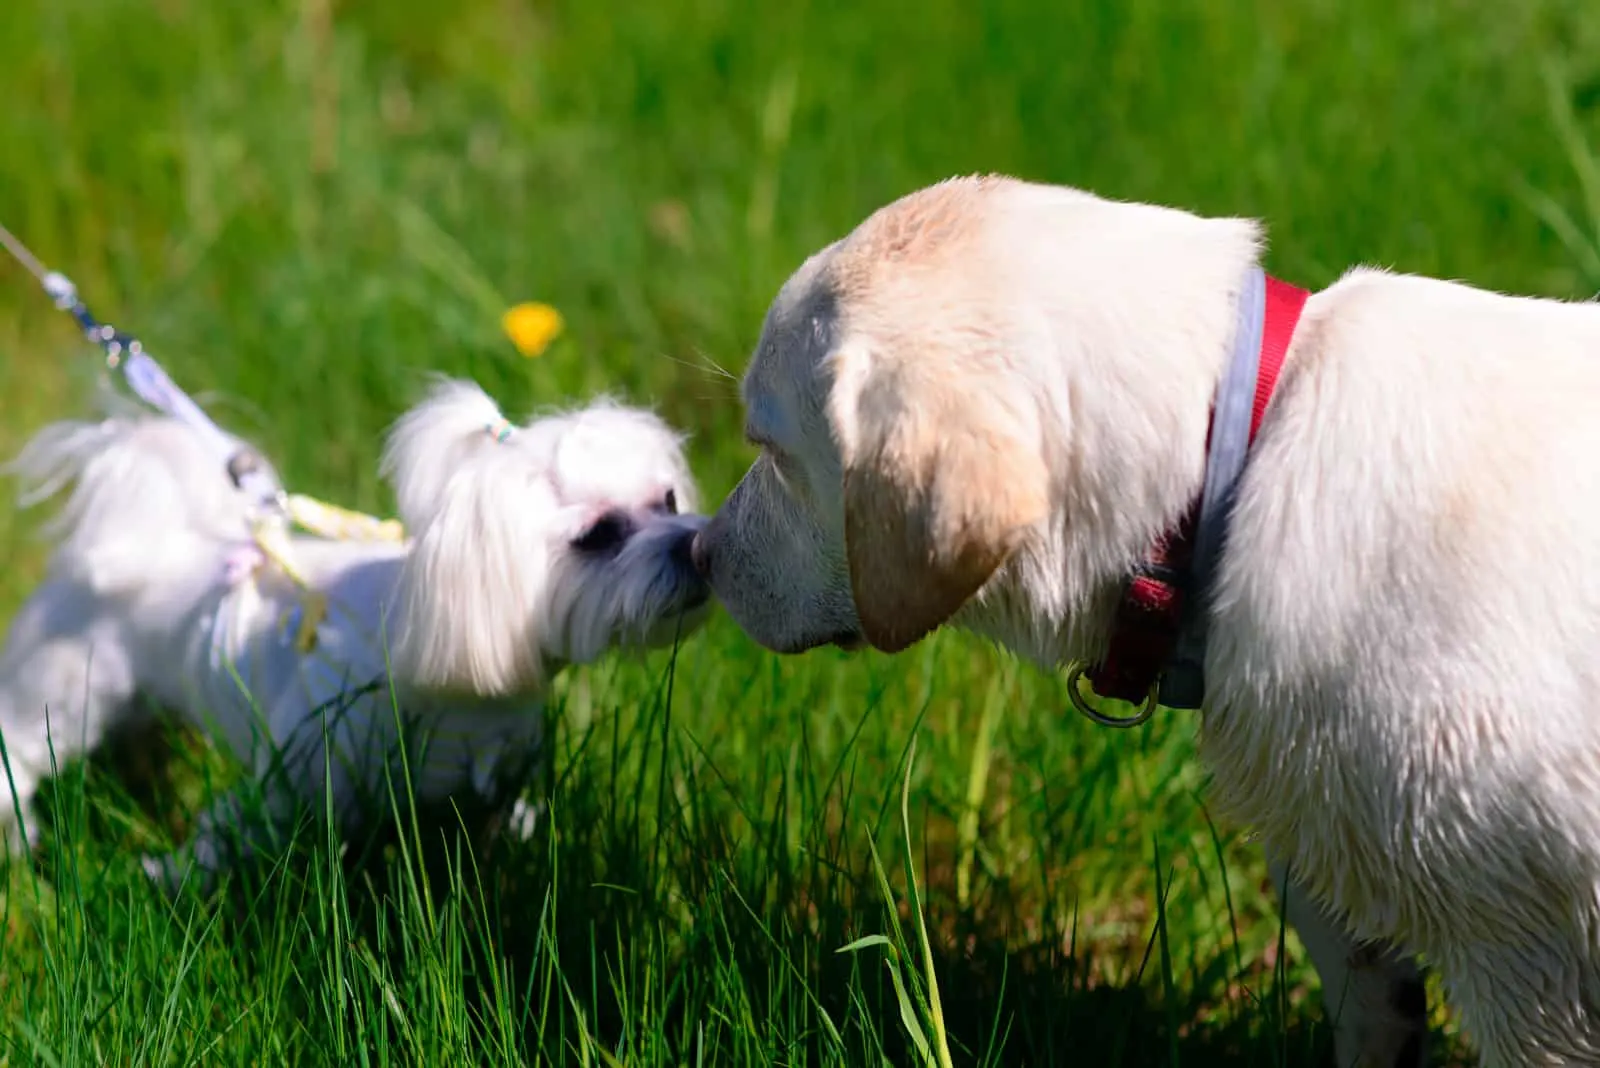 White maltese dog in the grass, companion dog